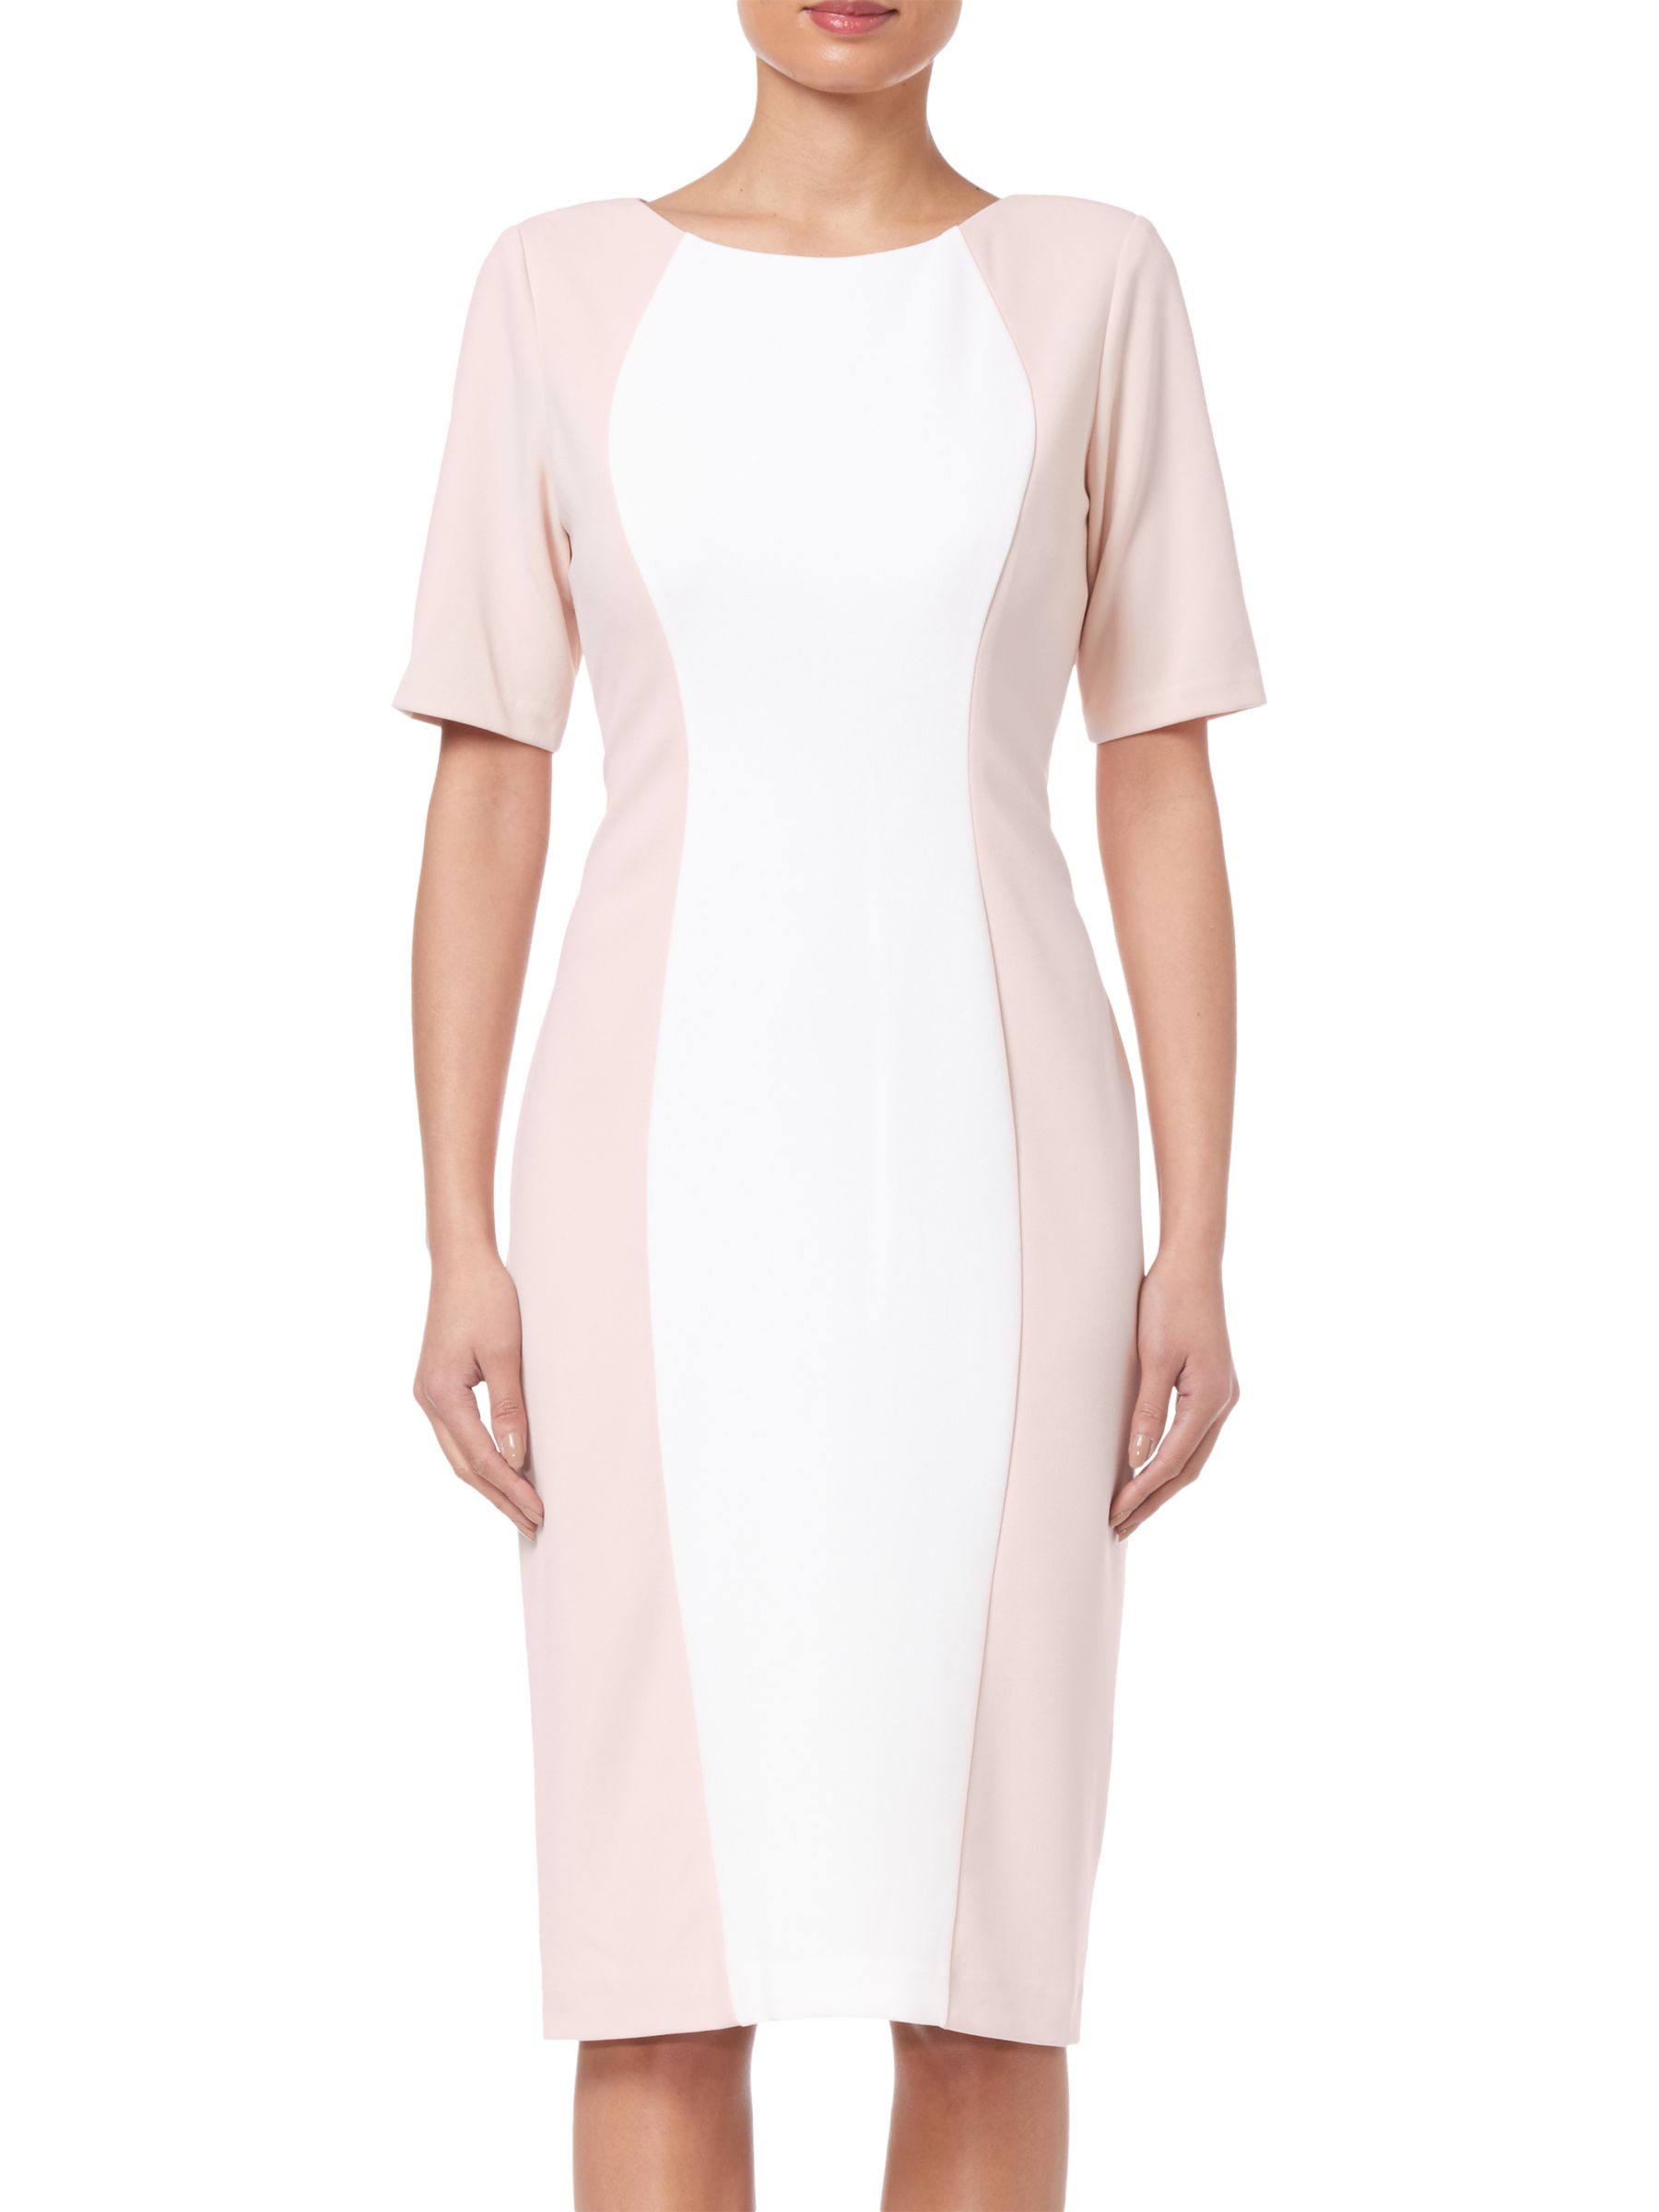 Adrianna Papell Crepe Colorblock Dress, Blush/Ivory